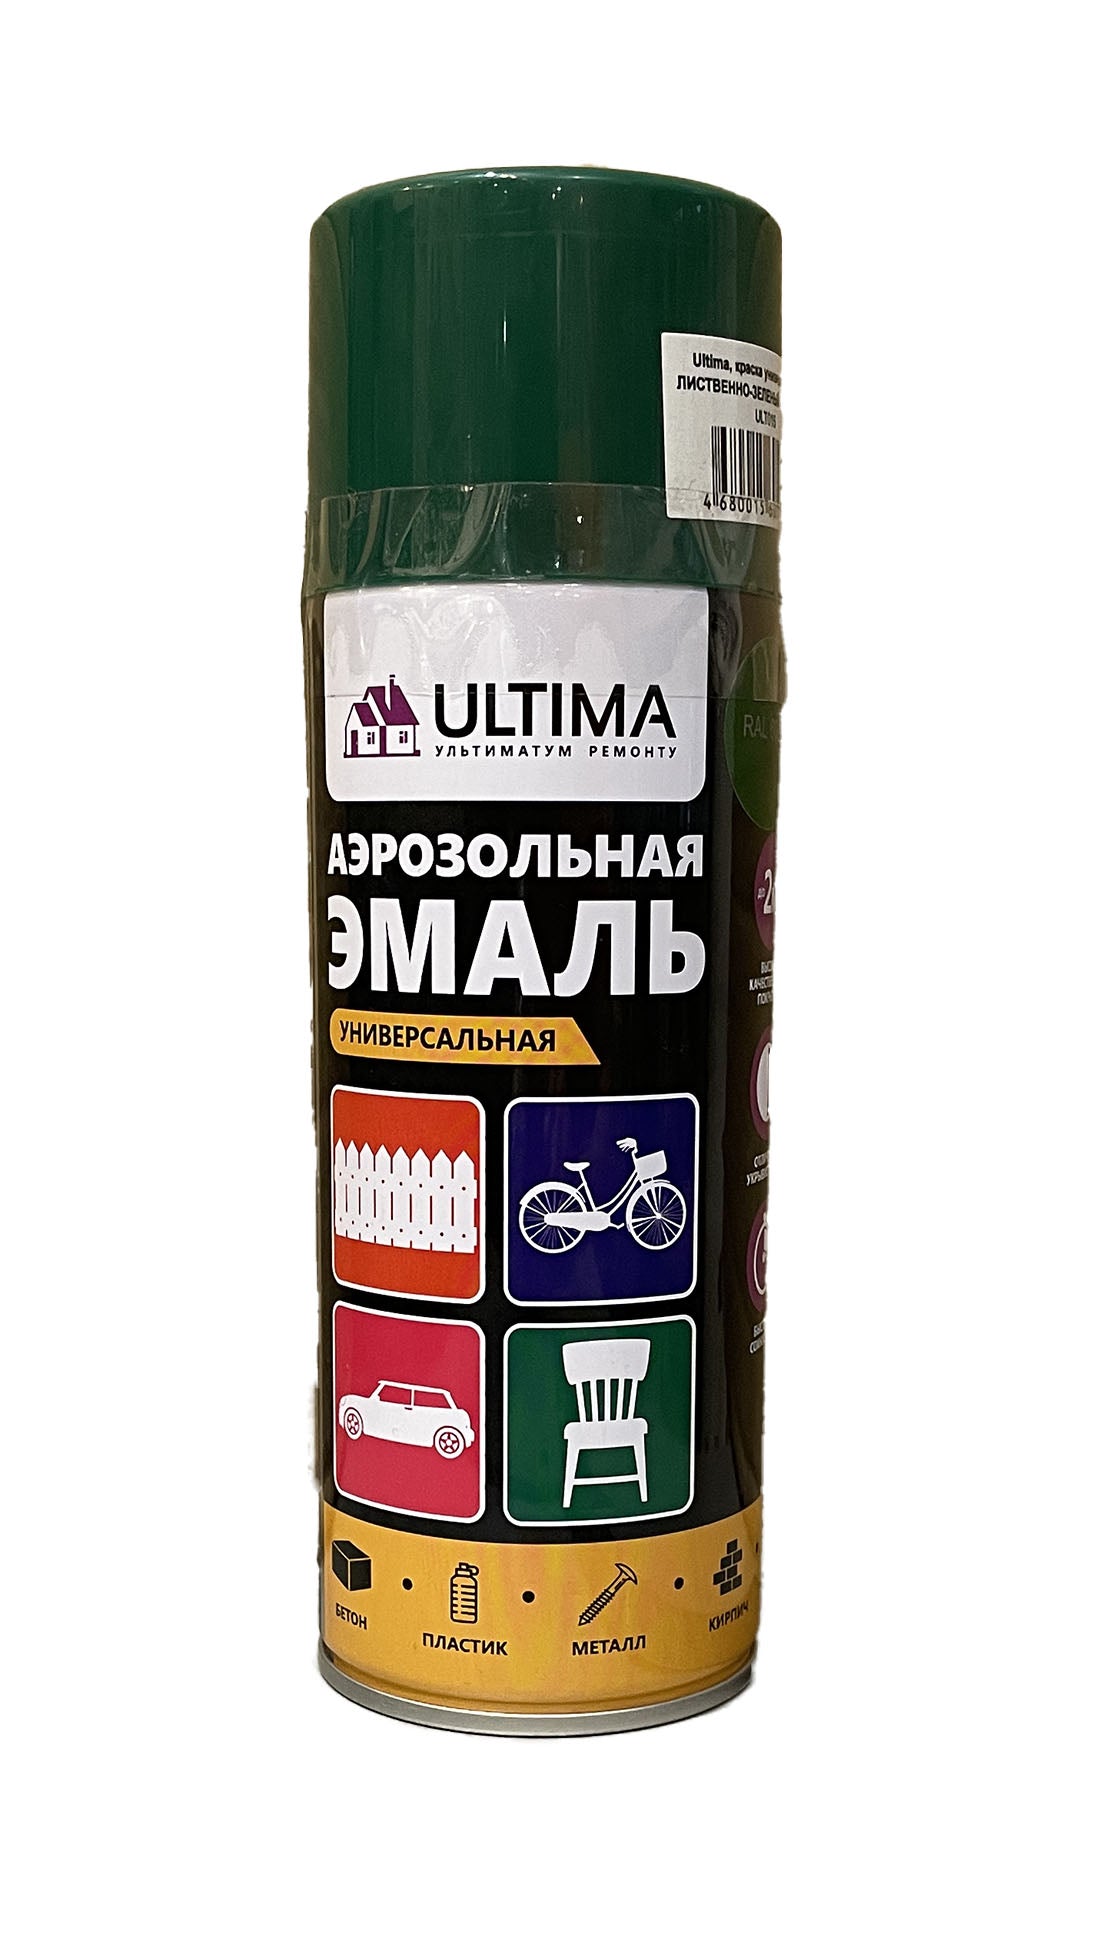 ULT-015 - аэрозольная универсальная эмаль, цвет: зеленая листва (RAL 6002), баллон: 520 мл.